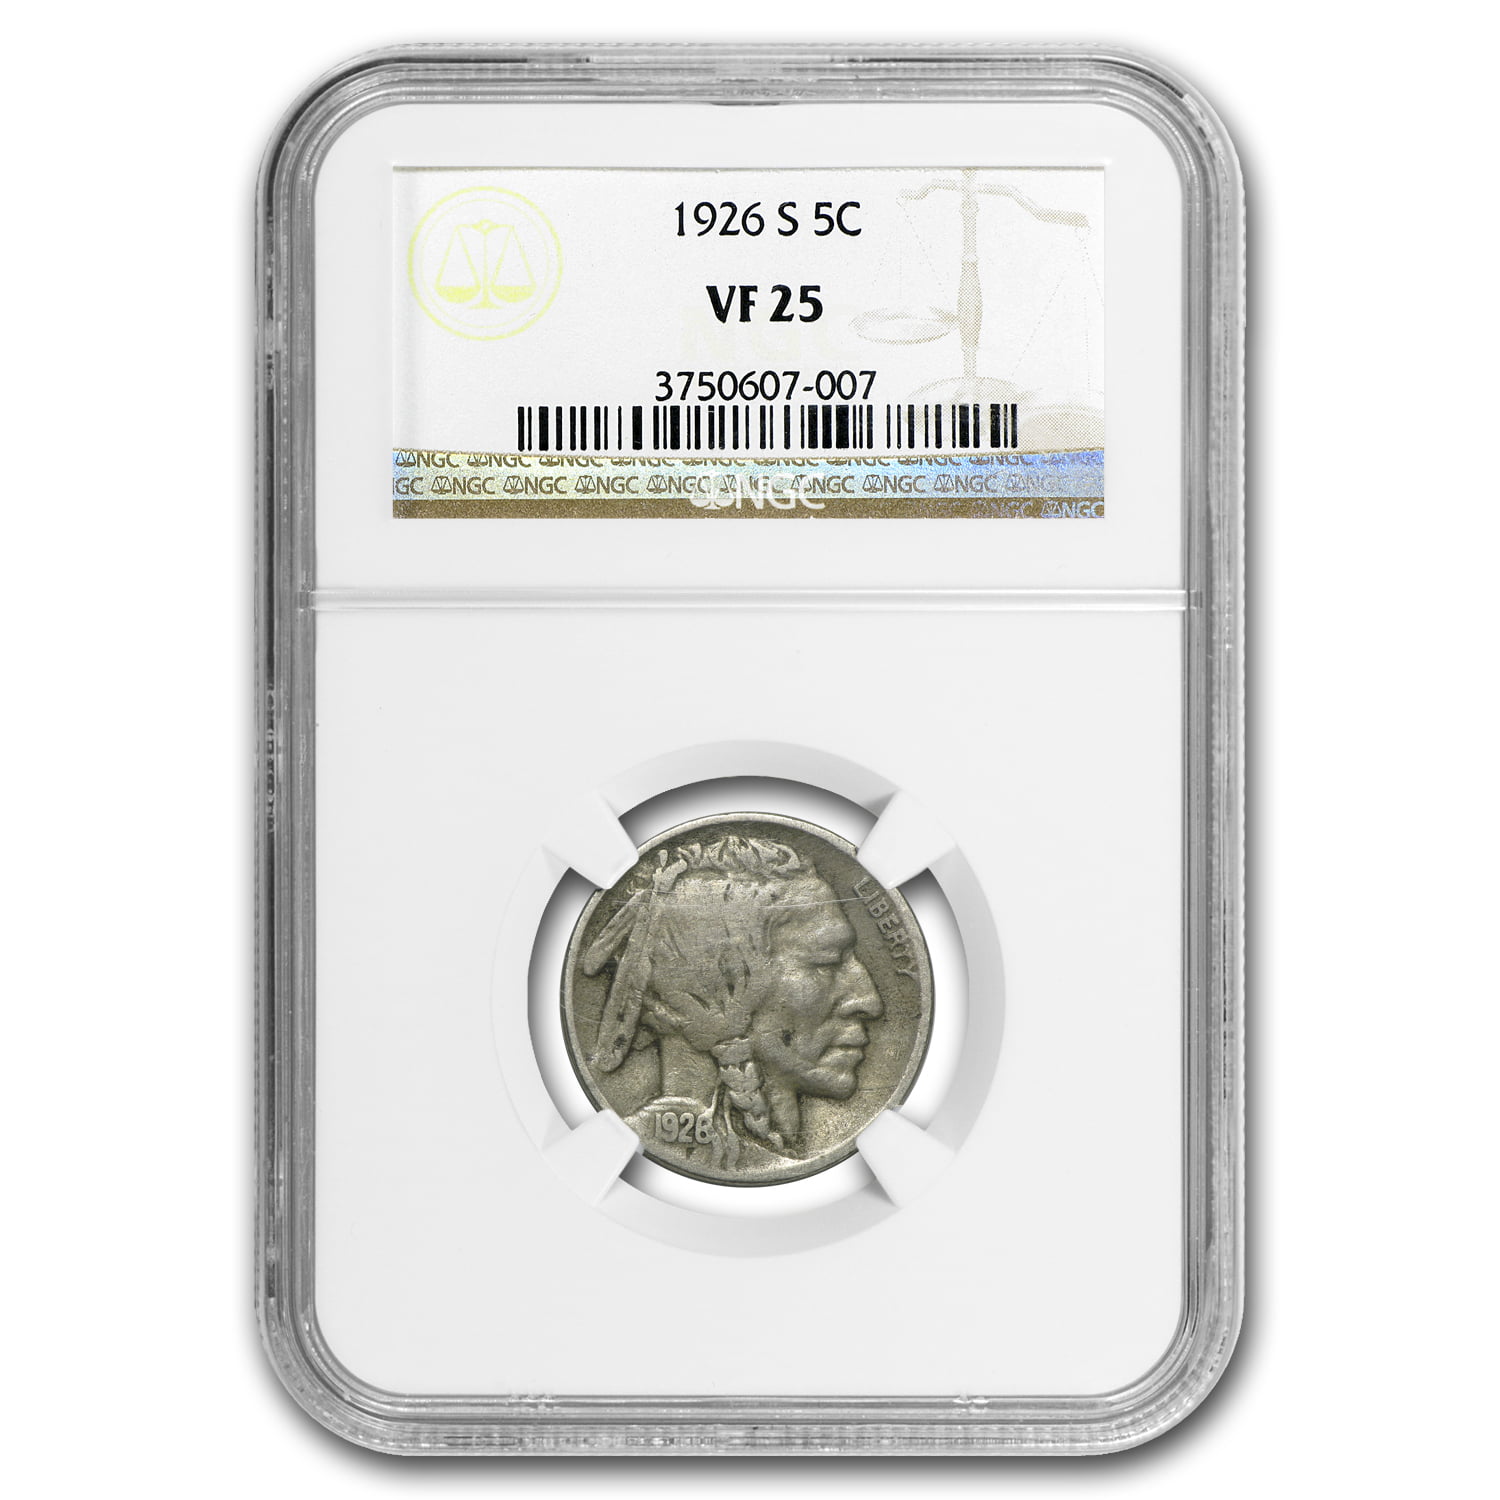 1934 D 5c Indian Head Buffalo Nickel US Coin VF Very Fine 